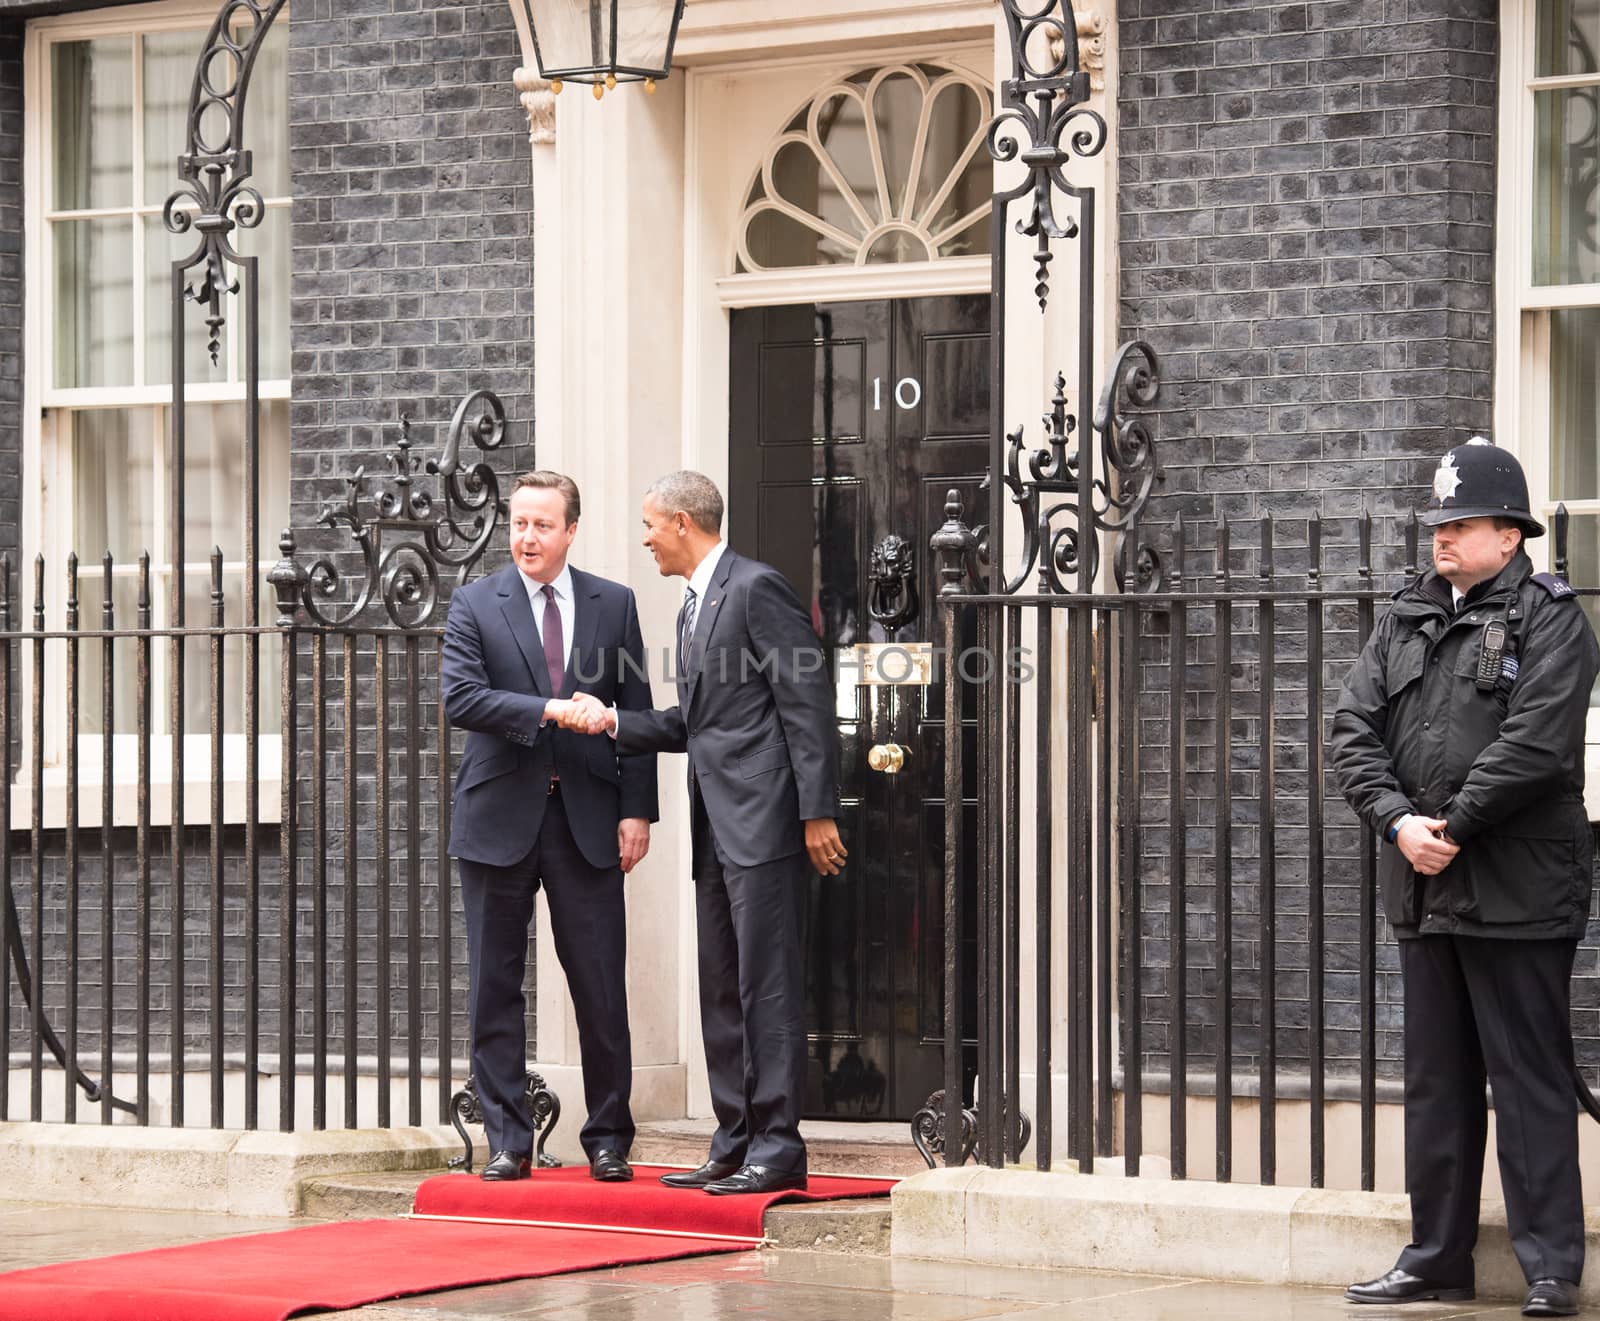 UK-LONDON-OBAMA CAMERON MEETING by newzulu